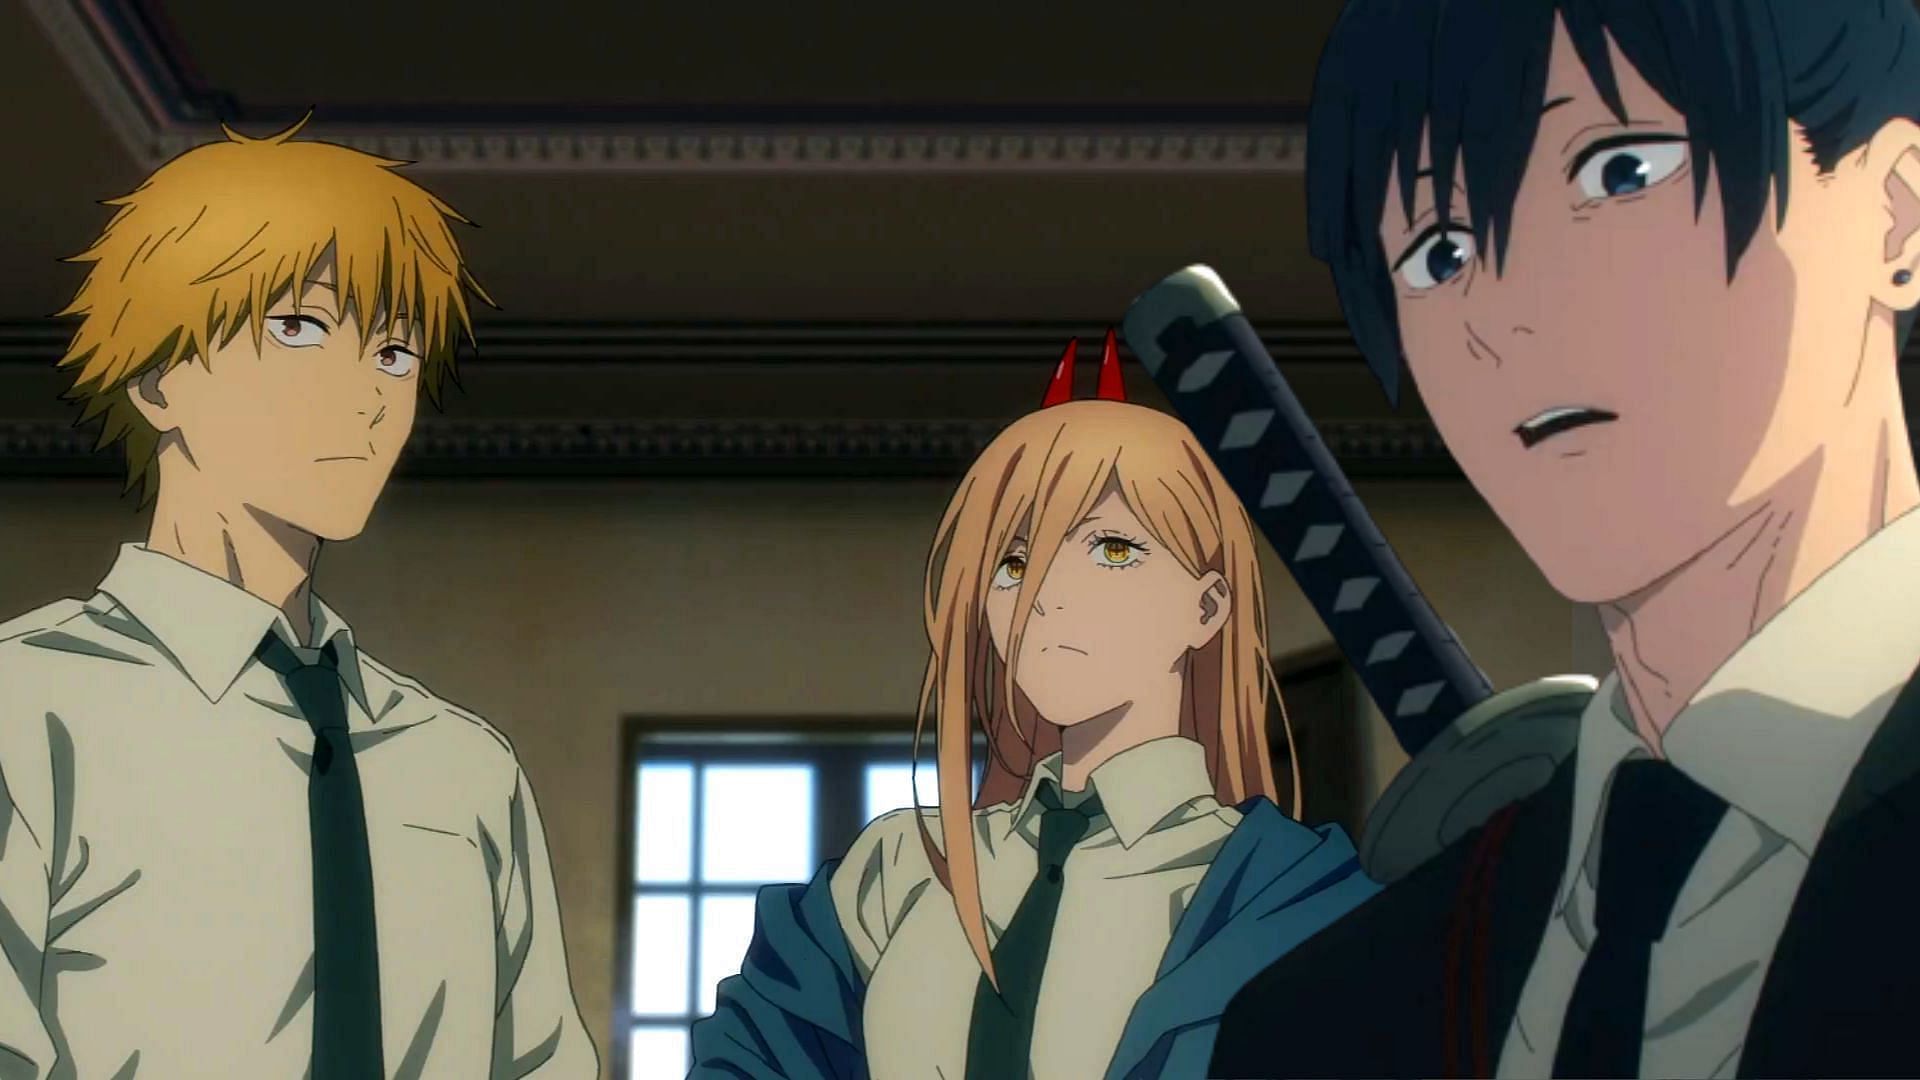 Denji, Power, and Aki as seen in Chainsaw Man anime (Image via Studio MAPPA)